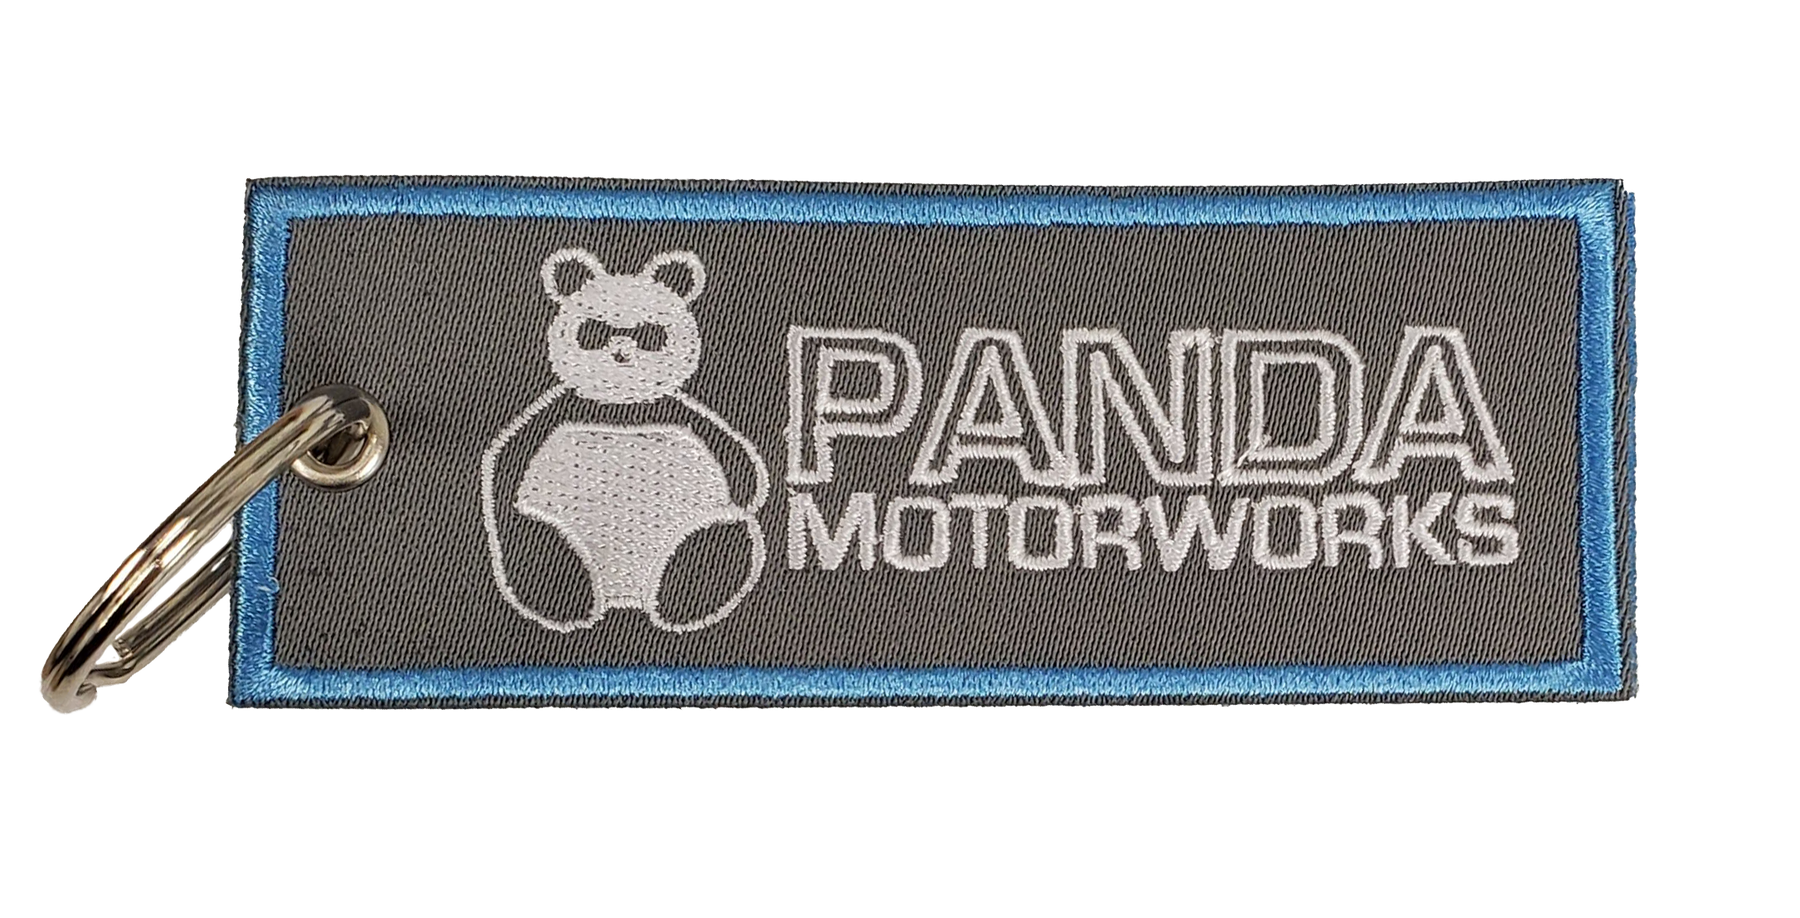 Panda Motorworks Key Chain